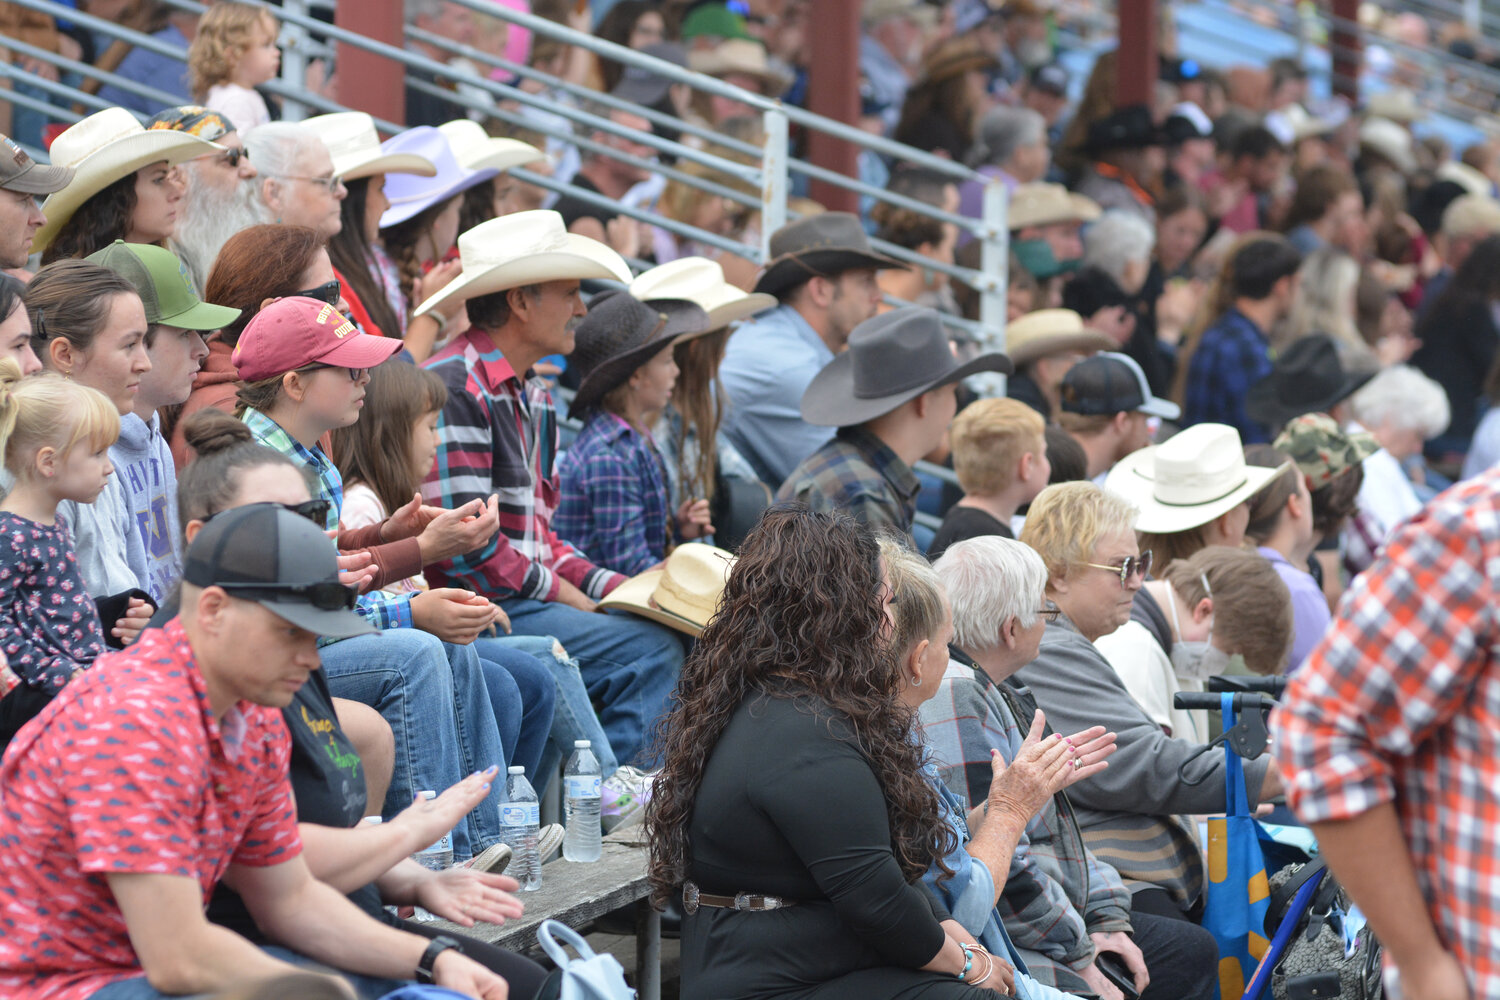 Rodeo attendants applaud a cowboy after a good ride on a buckin’ bronc.